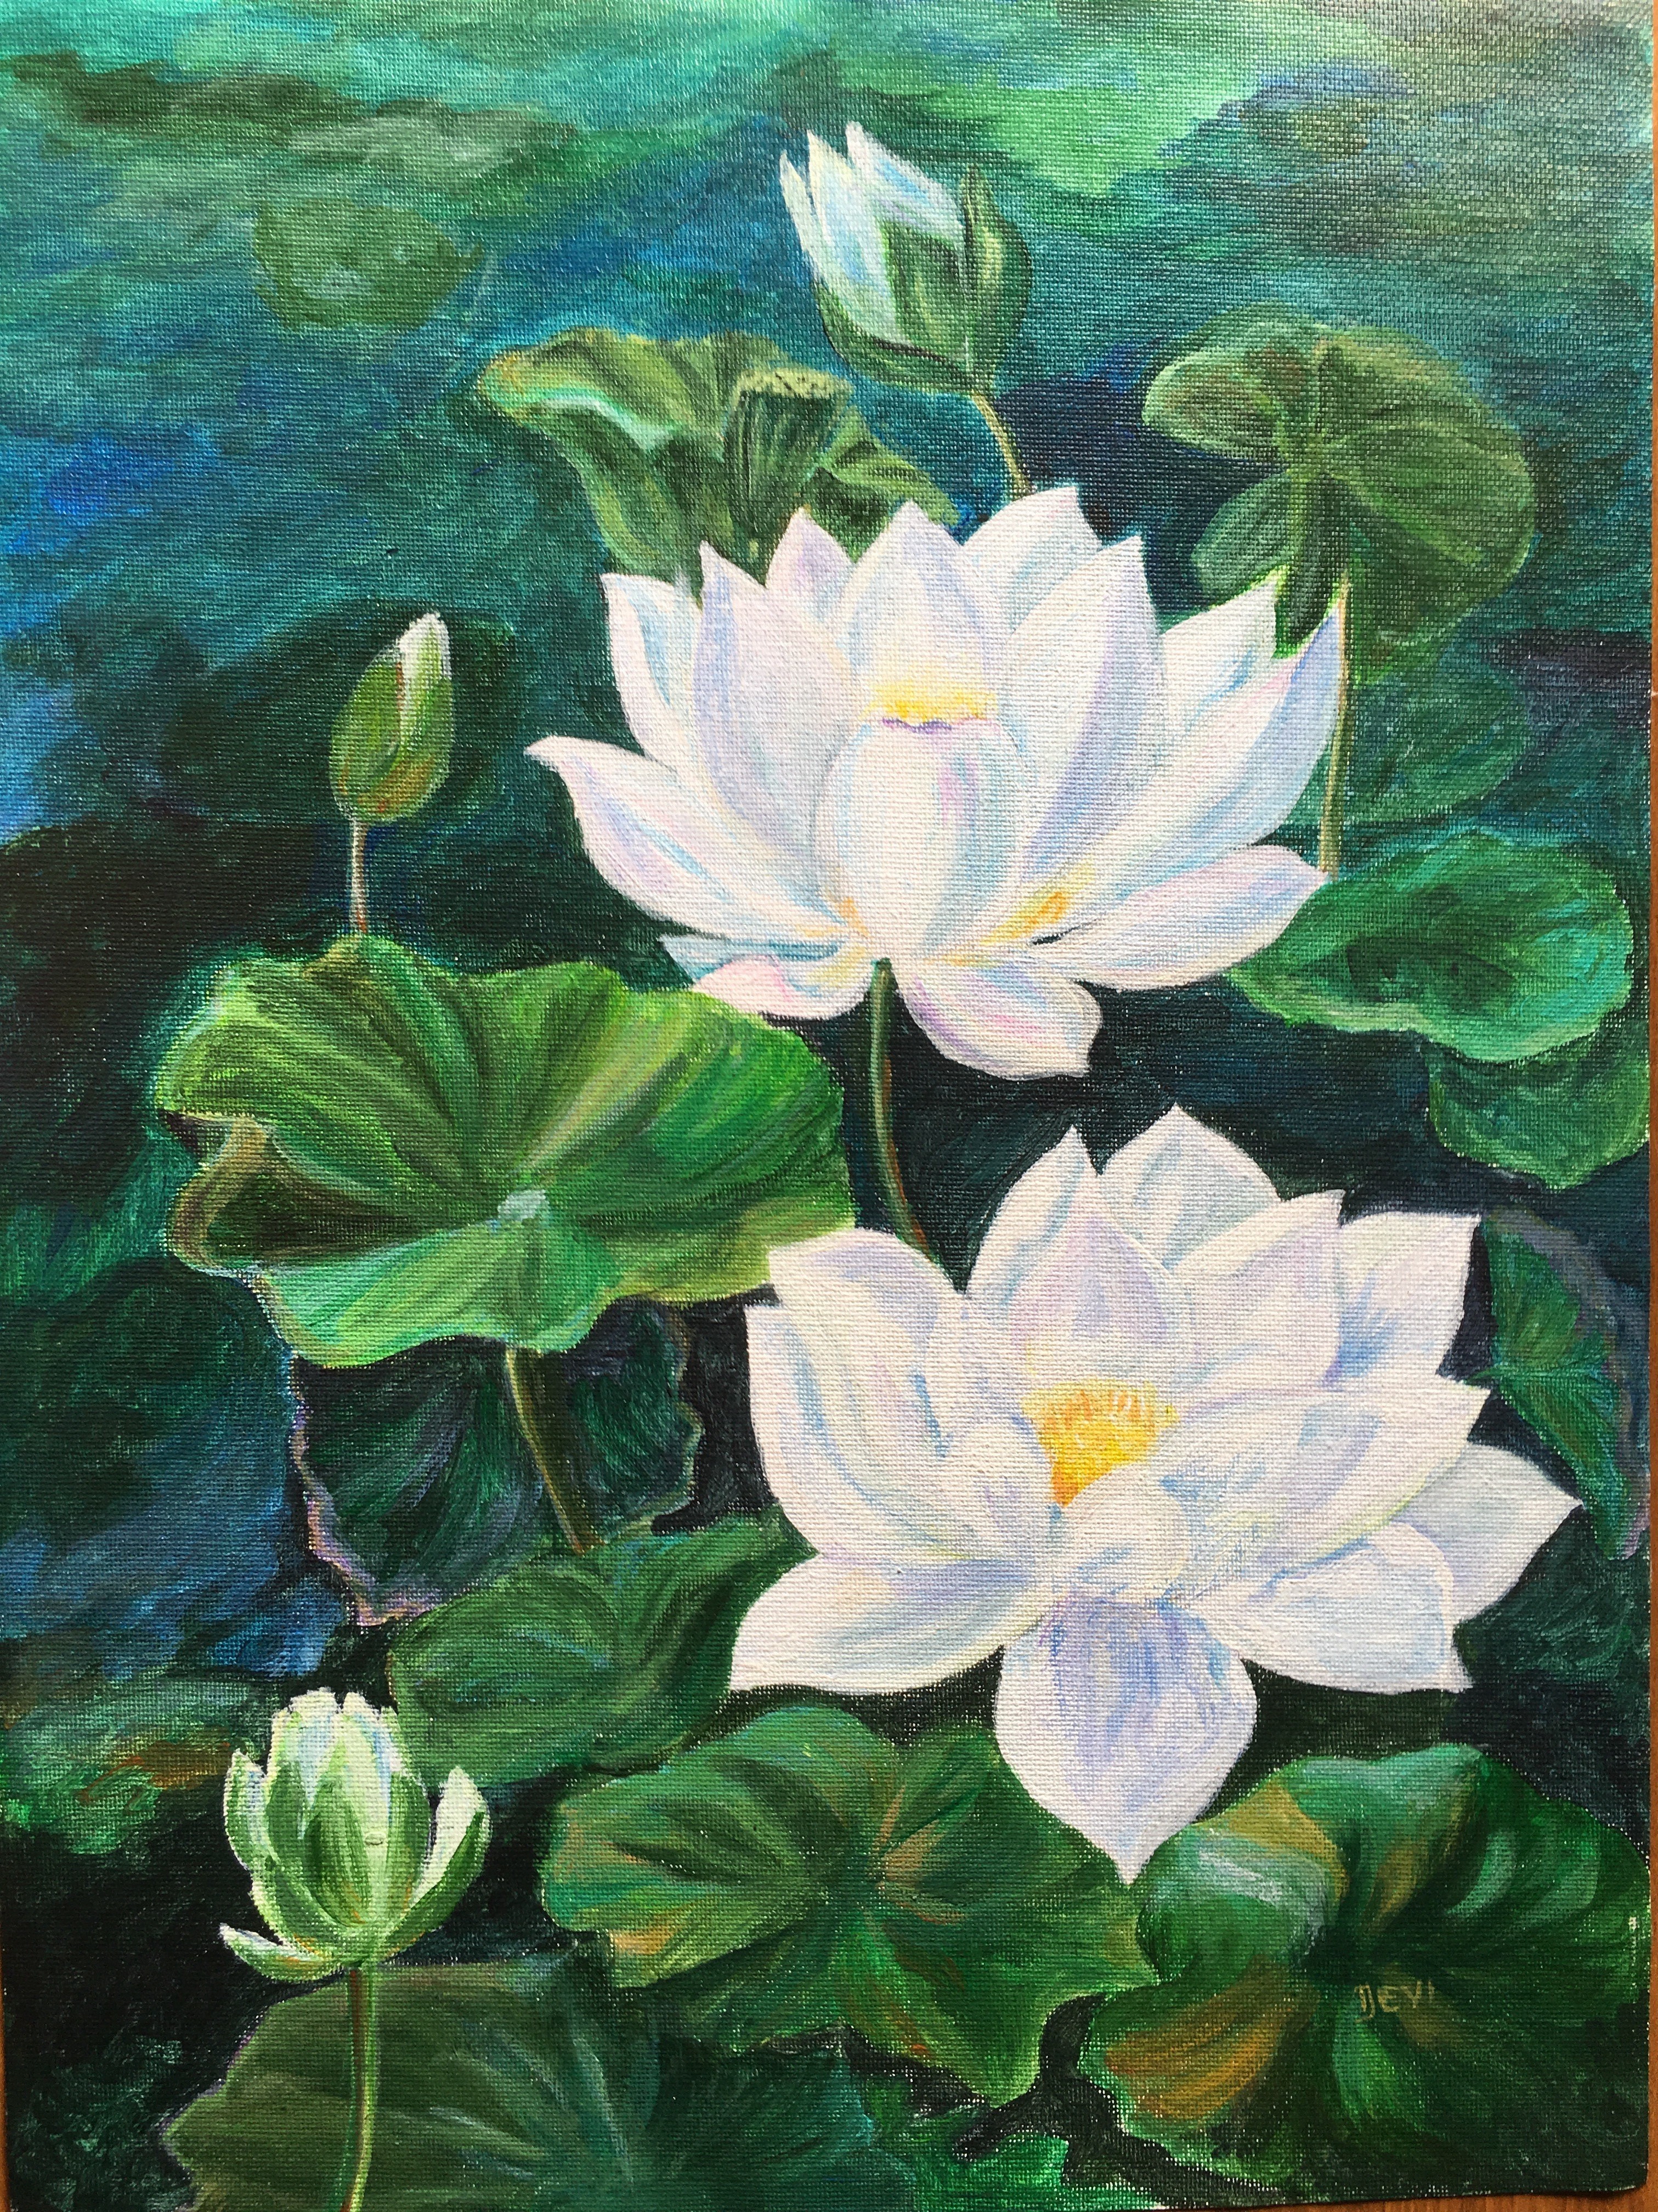 White Lotuses by Devika Ilayperuma-Florrimell